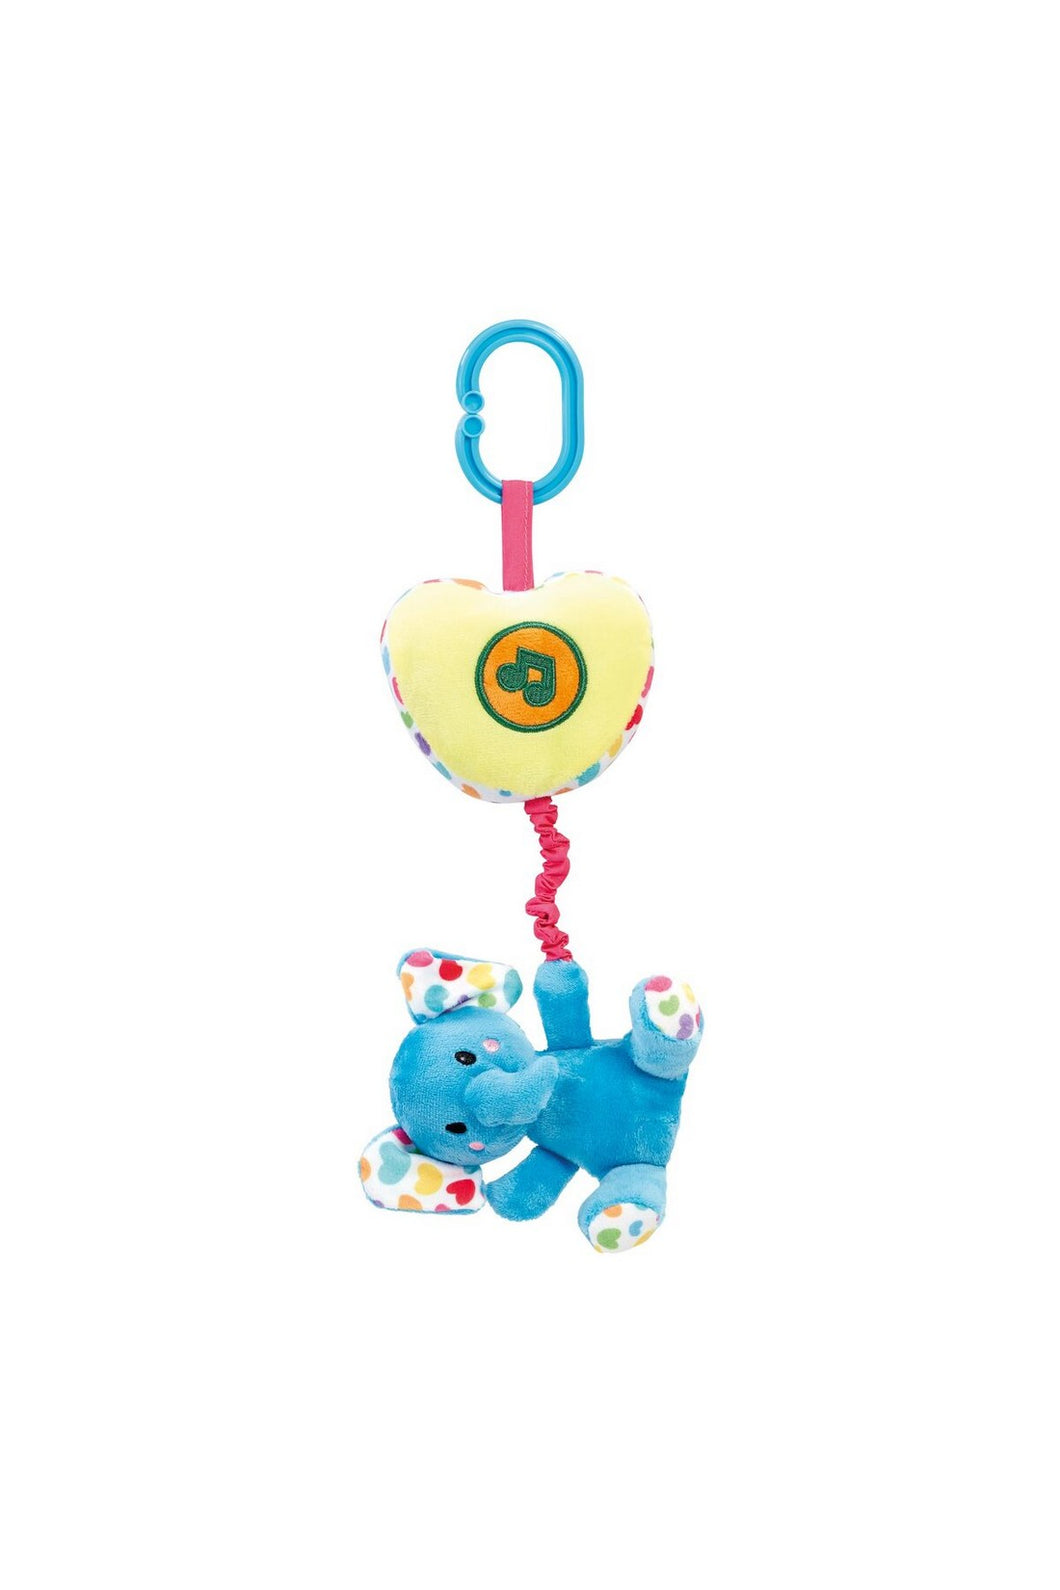 Addo Little Lot Lullaby Baby Elephant Pram Toy